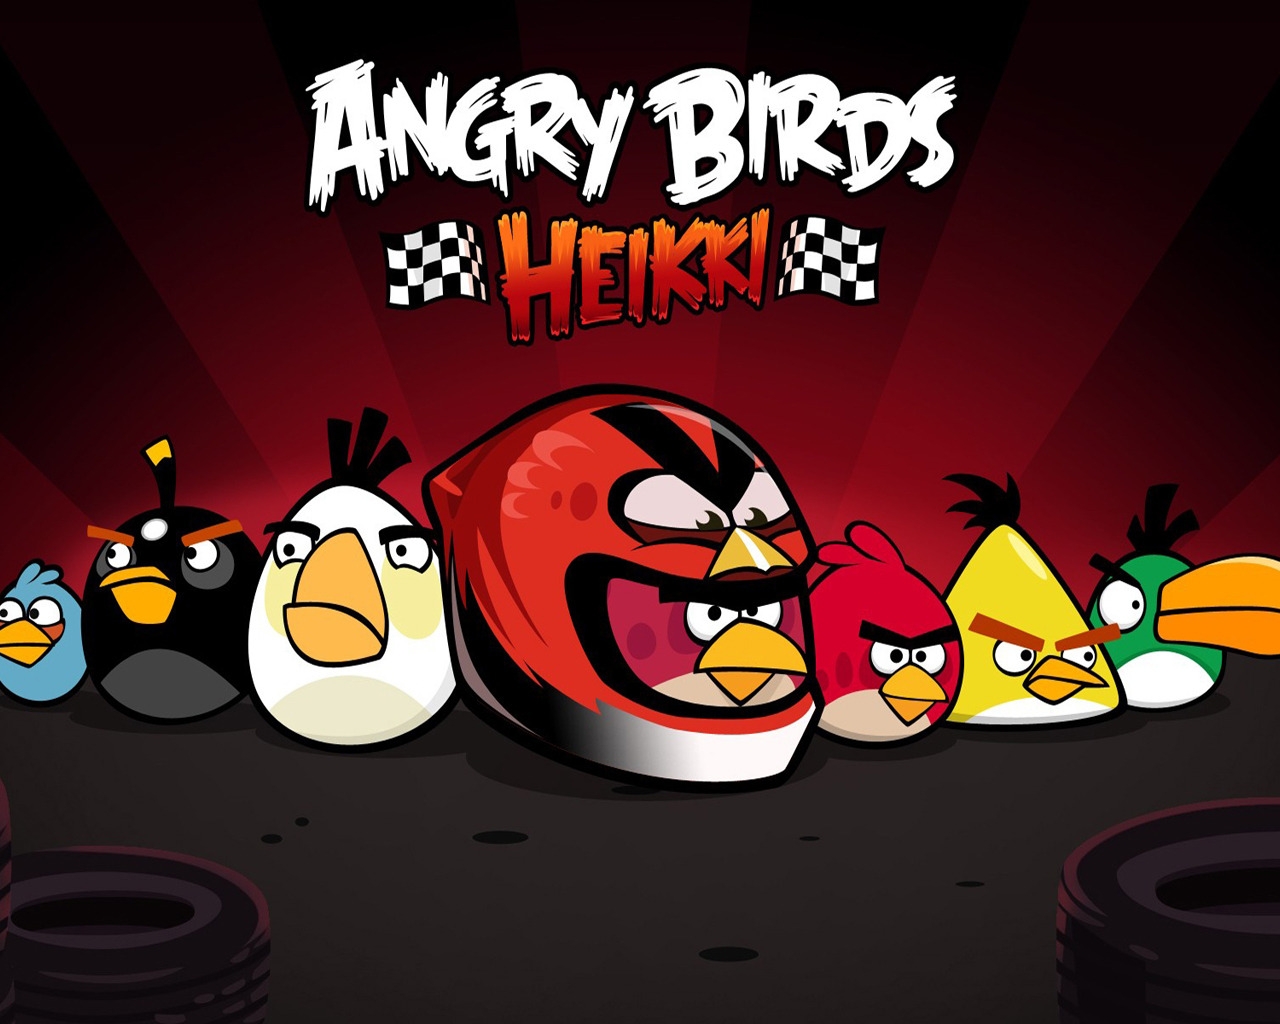 Angry Birds Heikki for 1280 x 1024 resolution